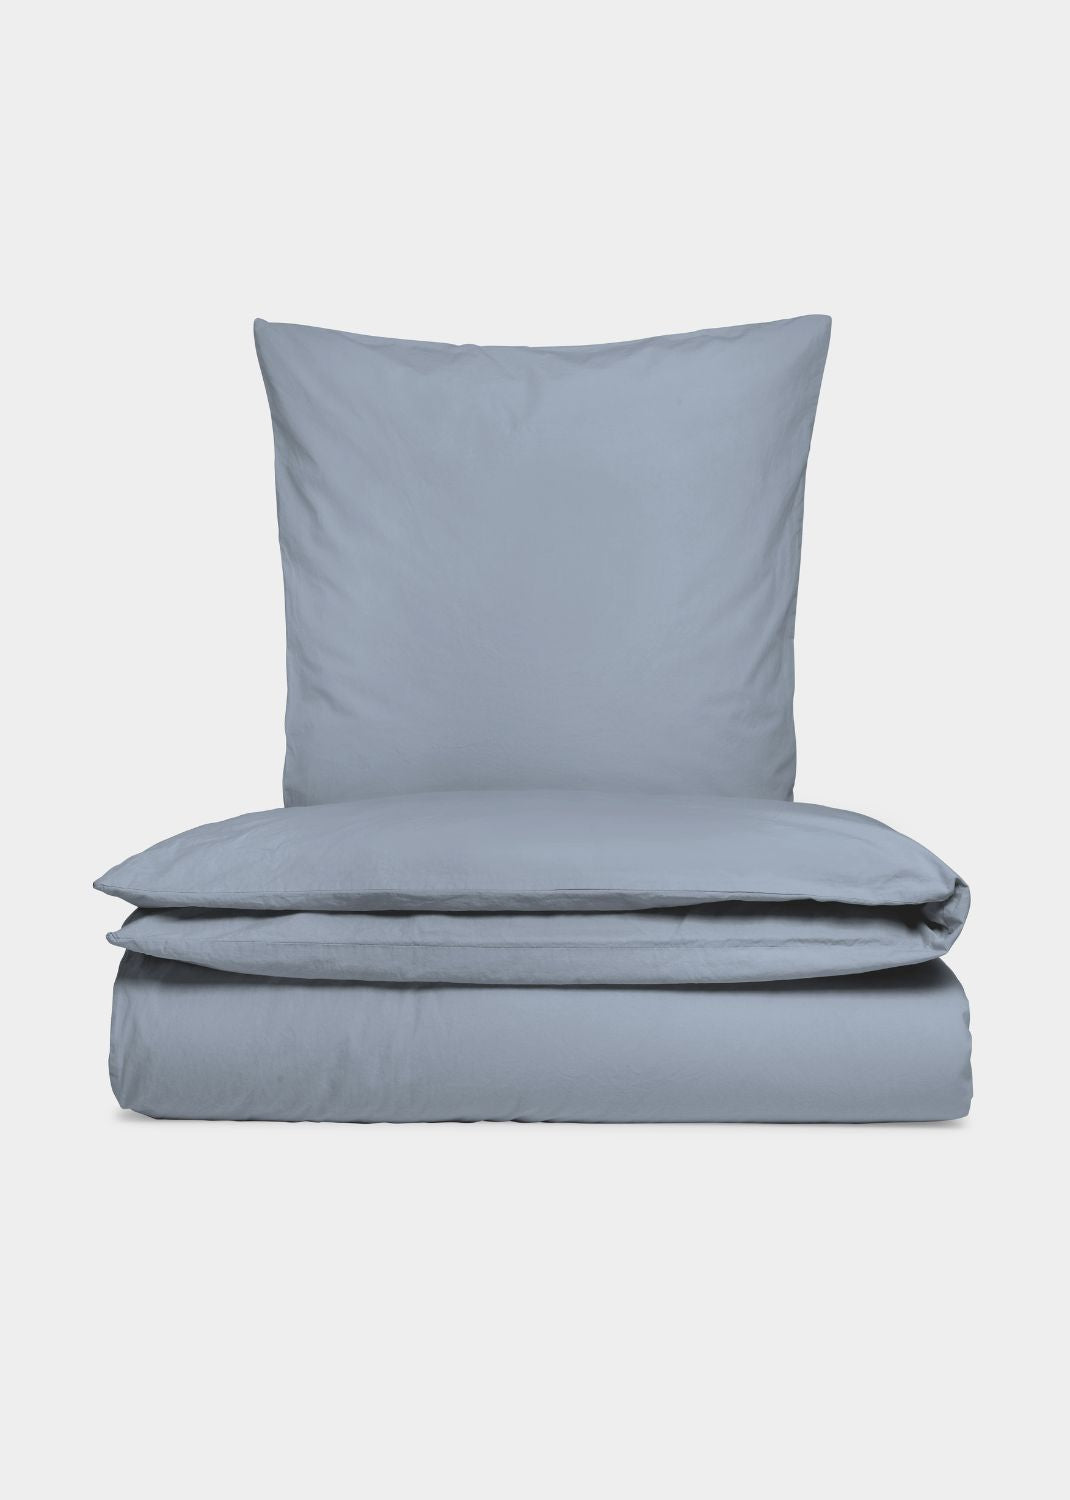 Sekan Studio Cotton Percale Bett Set - fällig blau